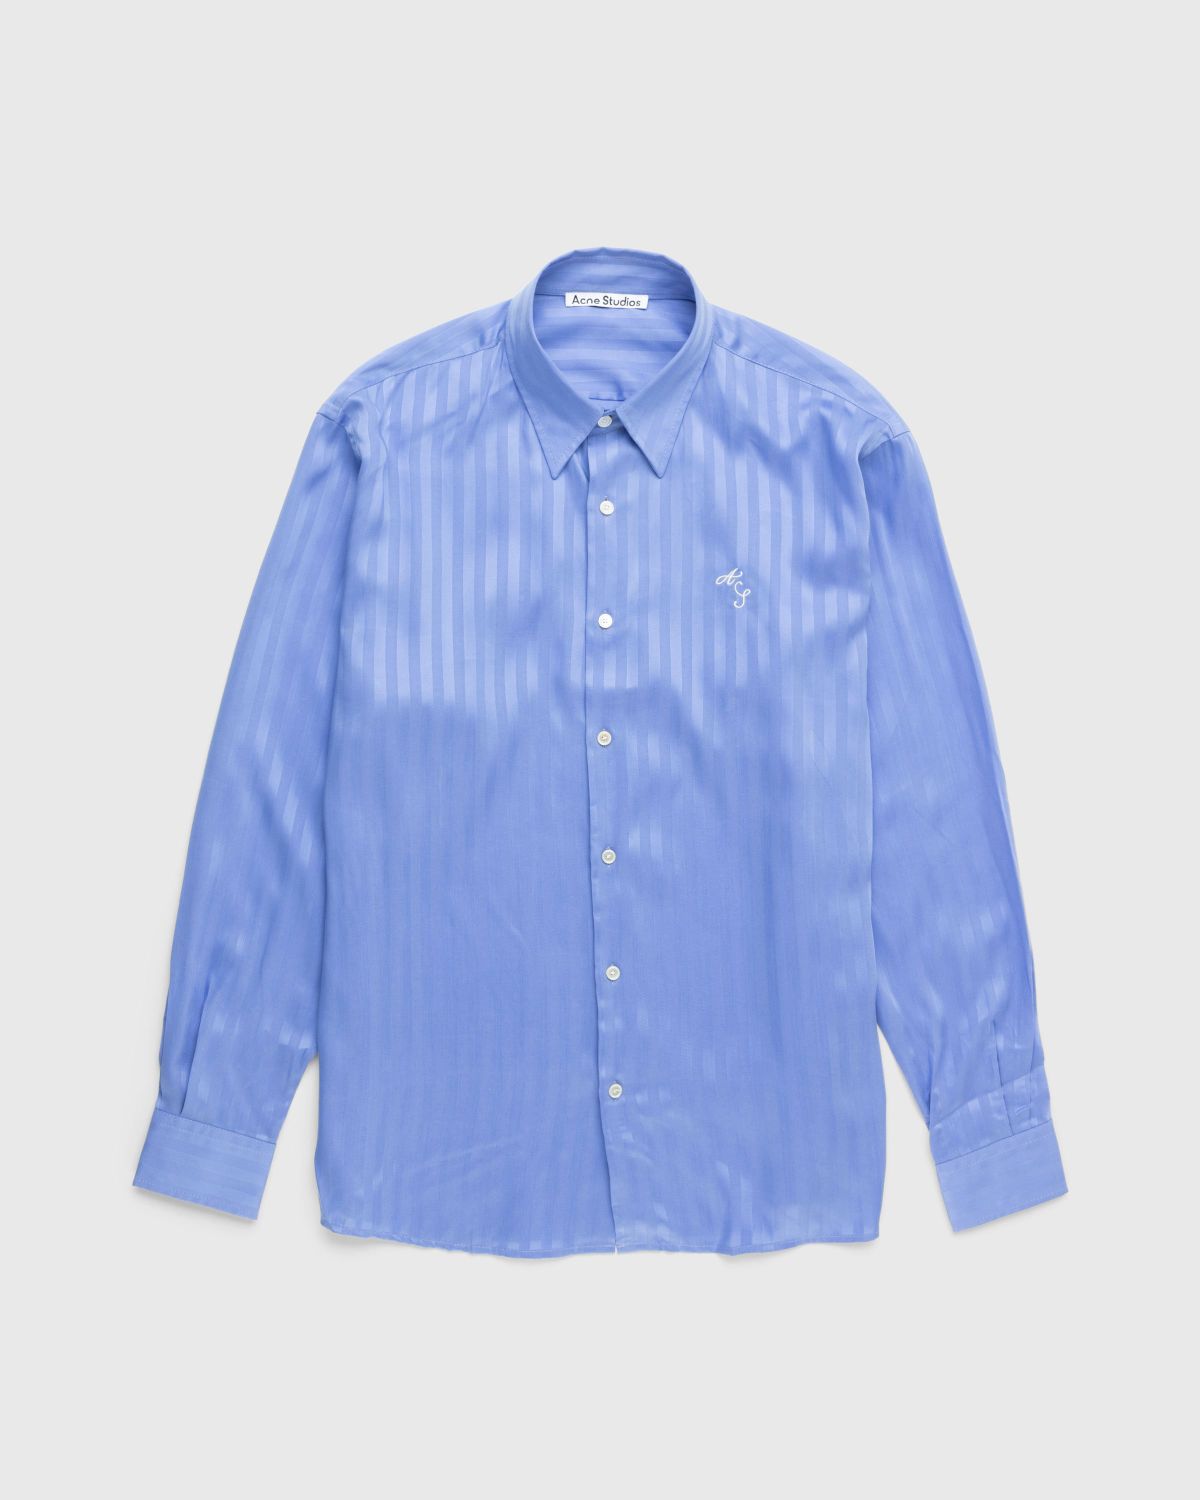 Acne Studios – Stripe Button-Up Shirt Blue - Shirts - Blue - Image 1